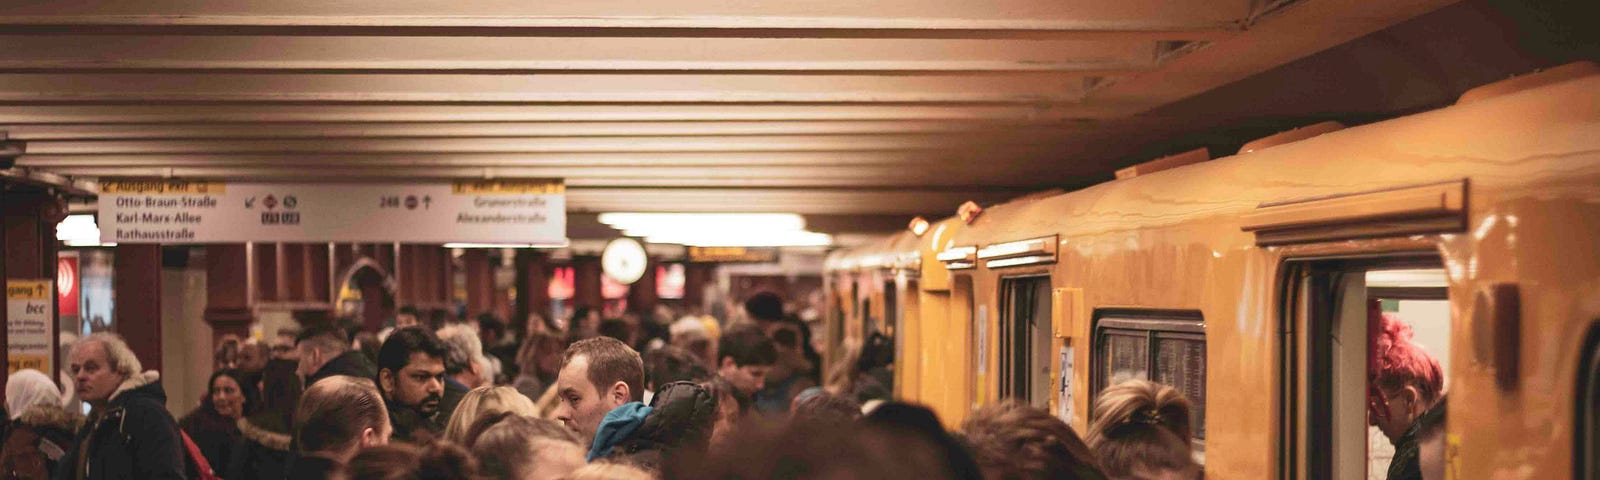 A crowded subway platform